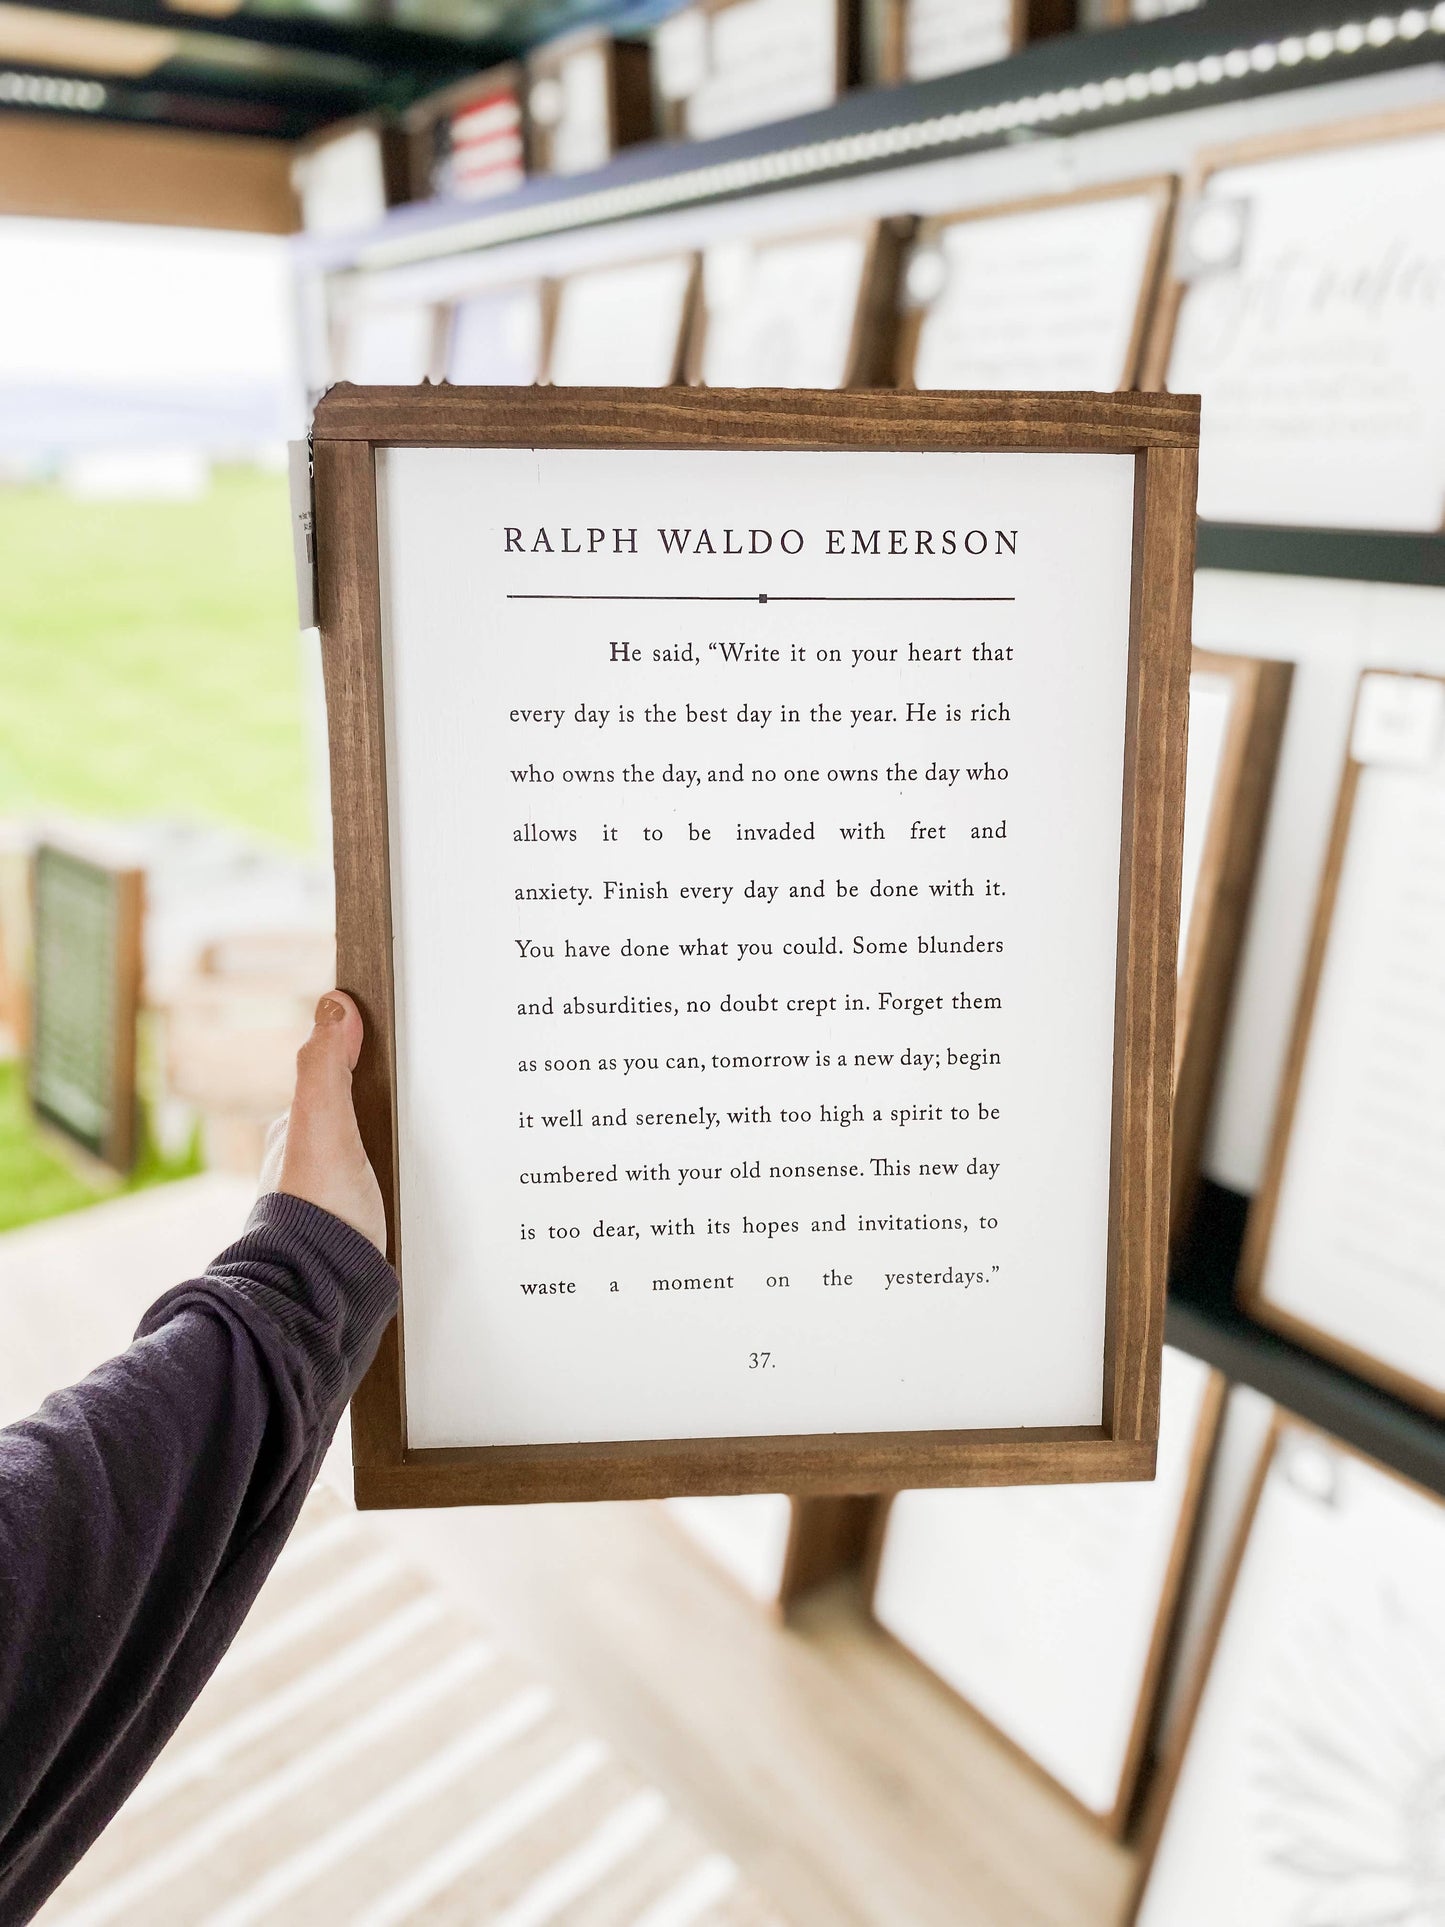 He Said, "Write It On Your Heart" - Ralph Waldo Emerson